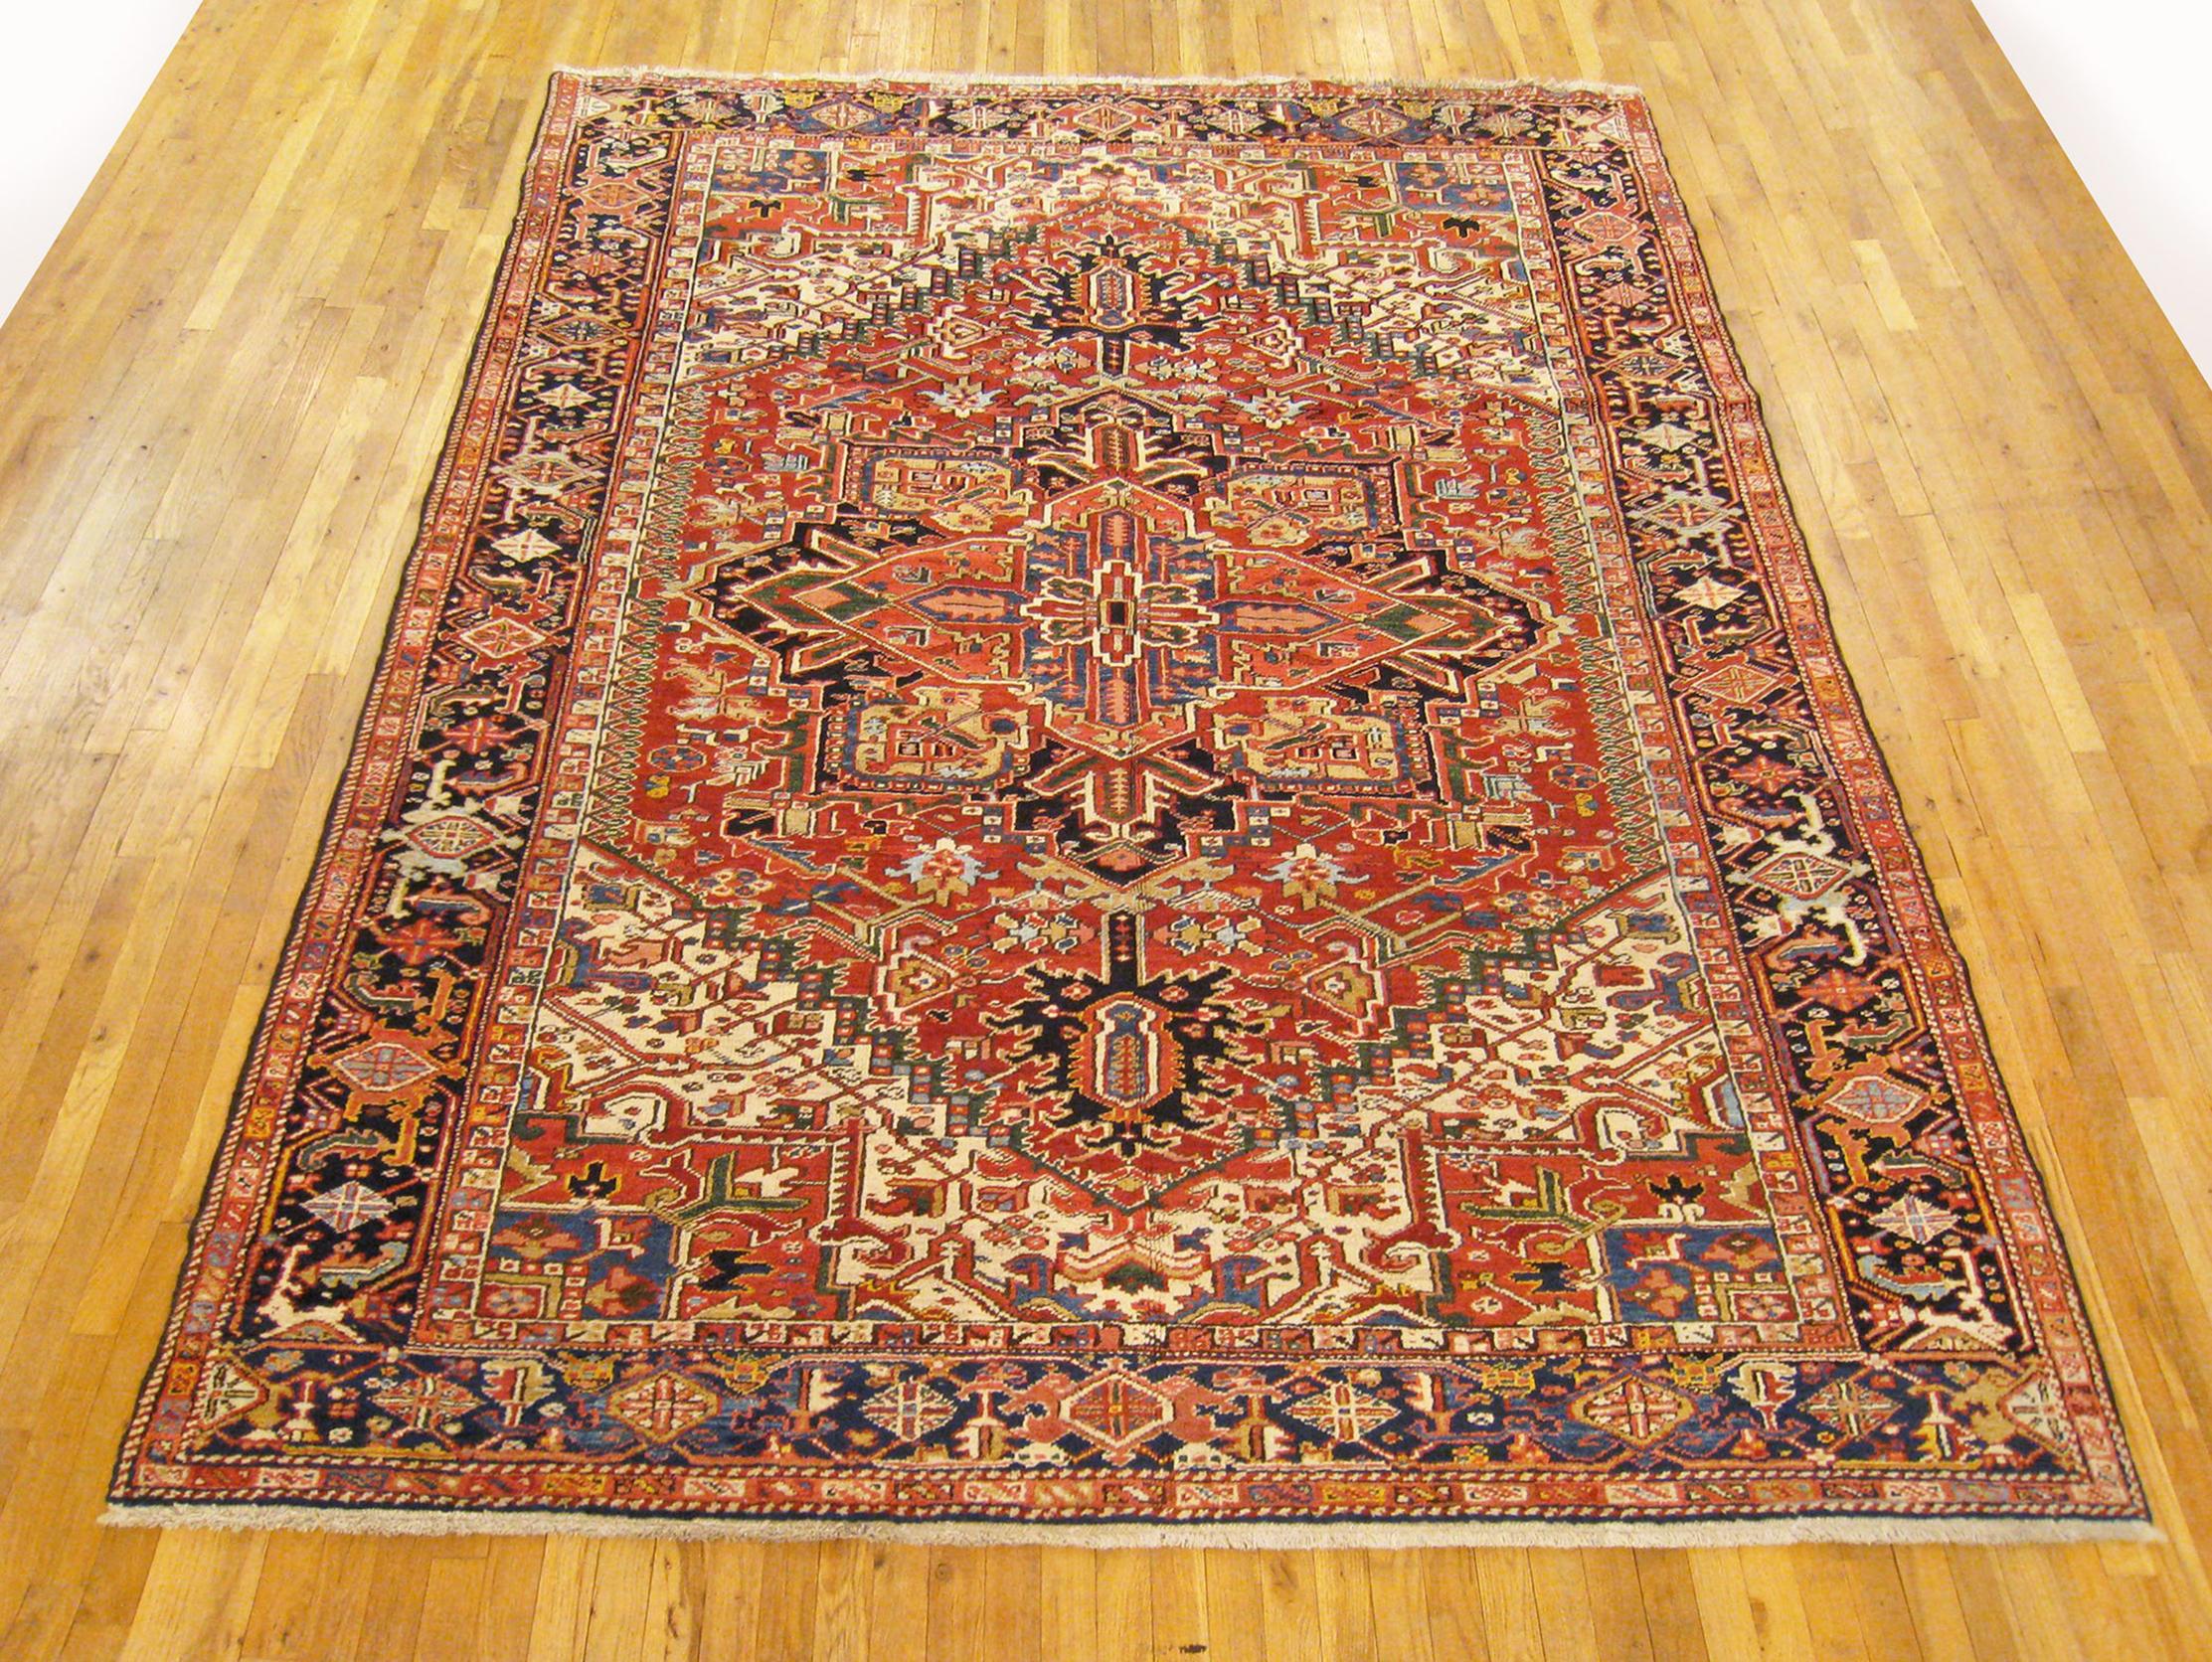 Vintage Persian Heriz Oriental rug, room size

A vintage Persian Heriz oriental rug, size 10'3